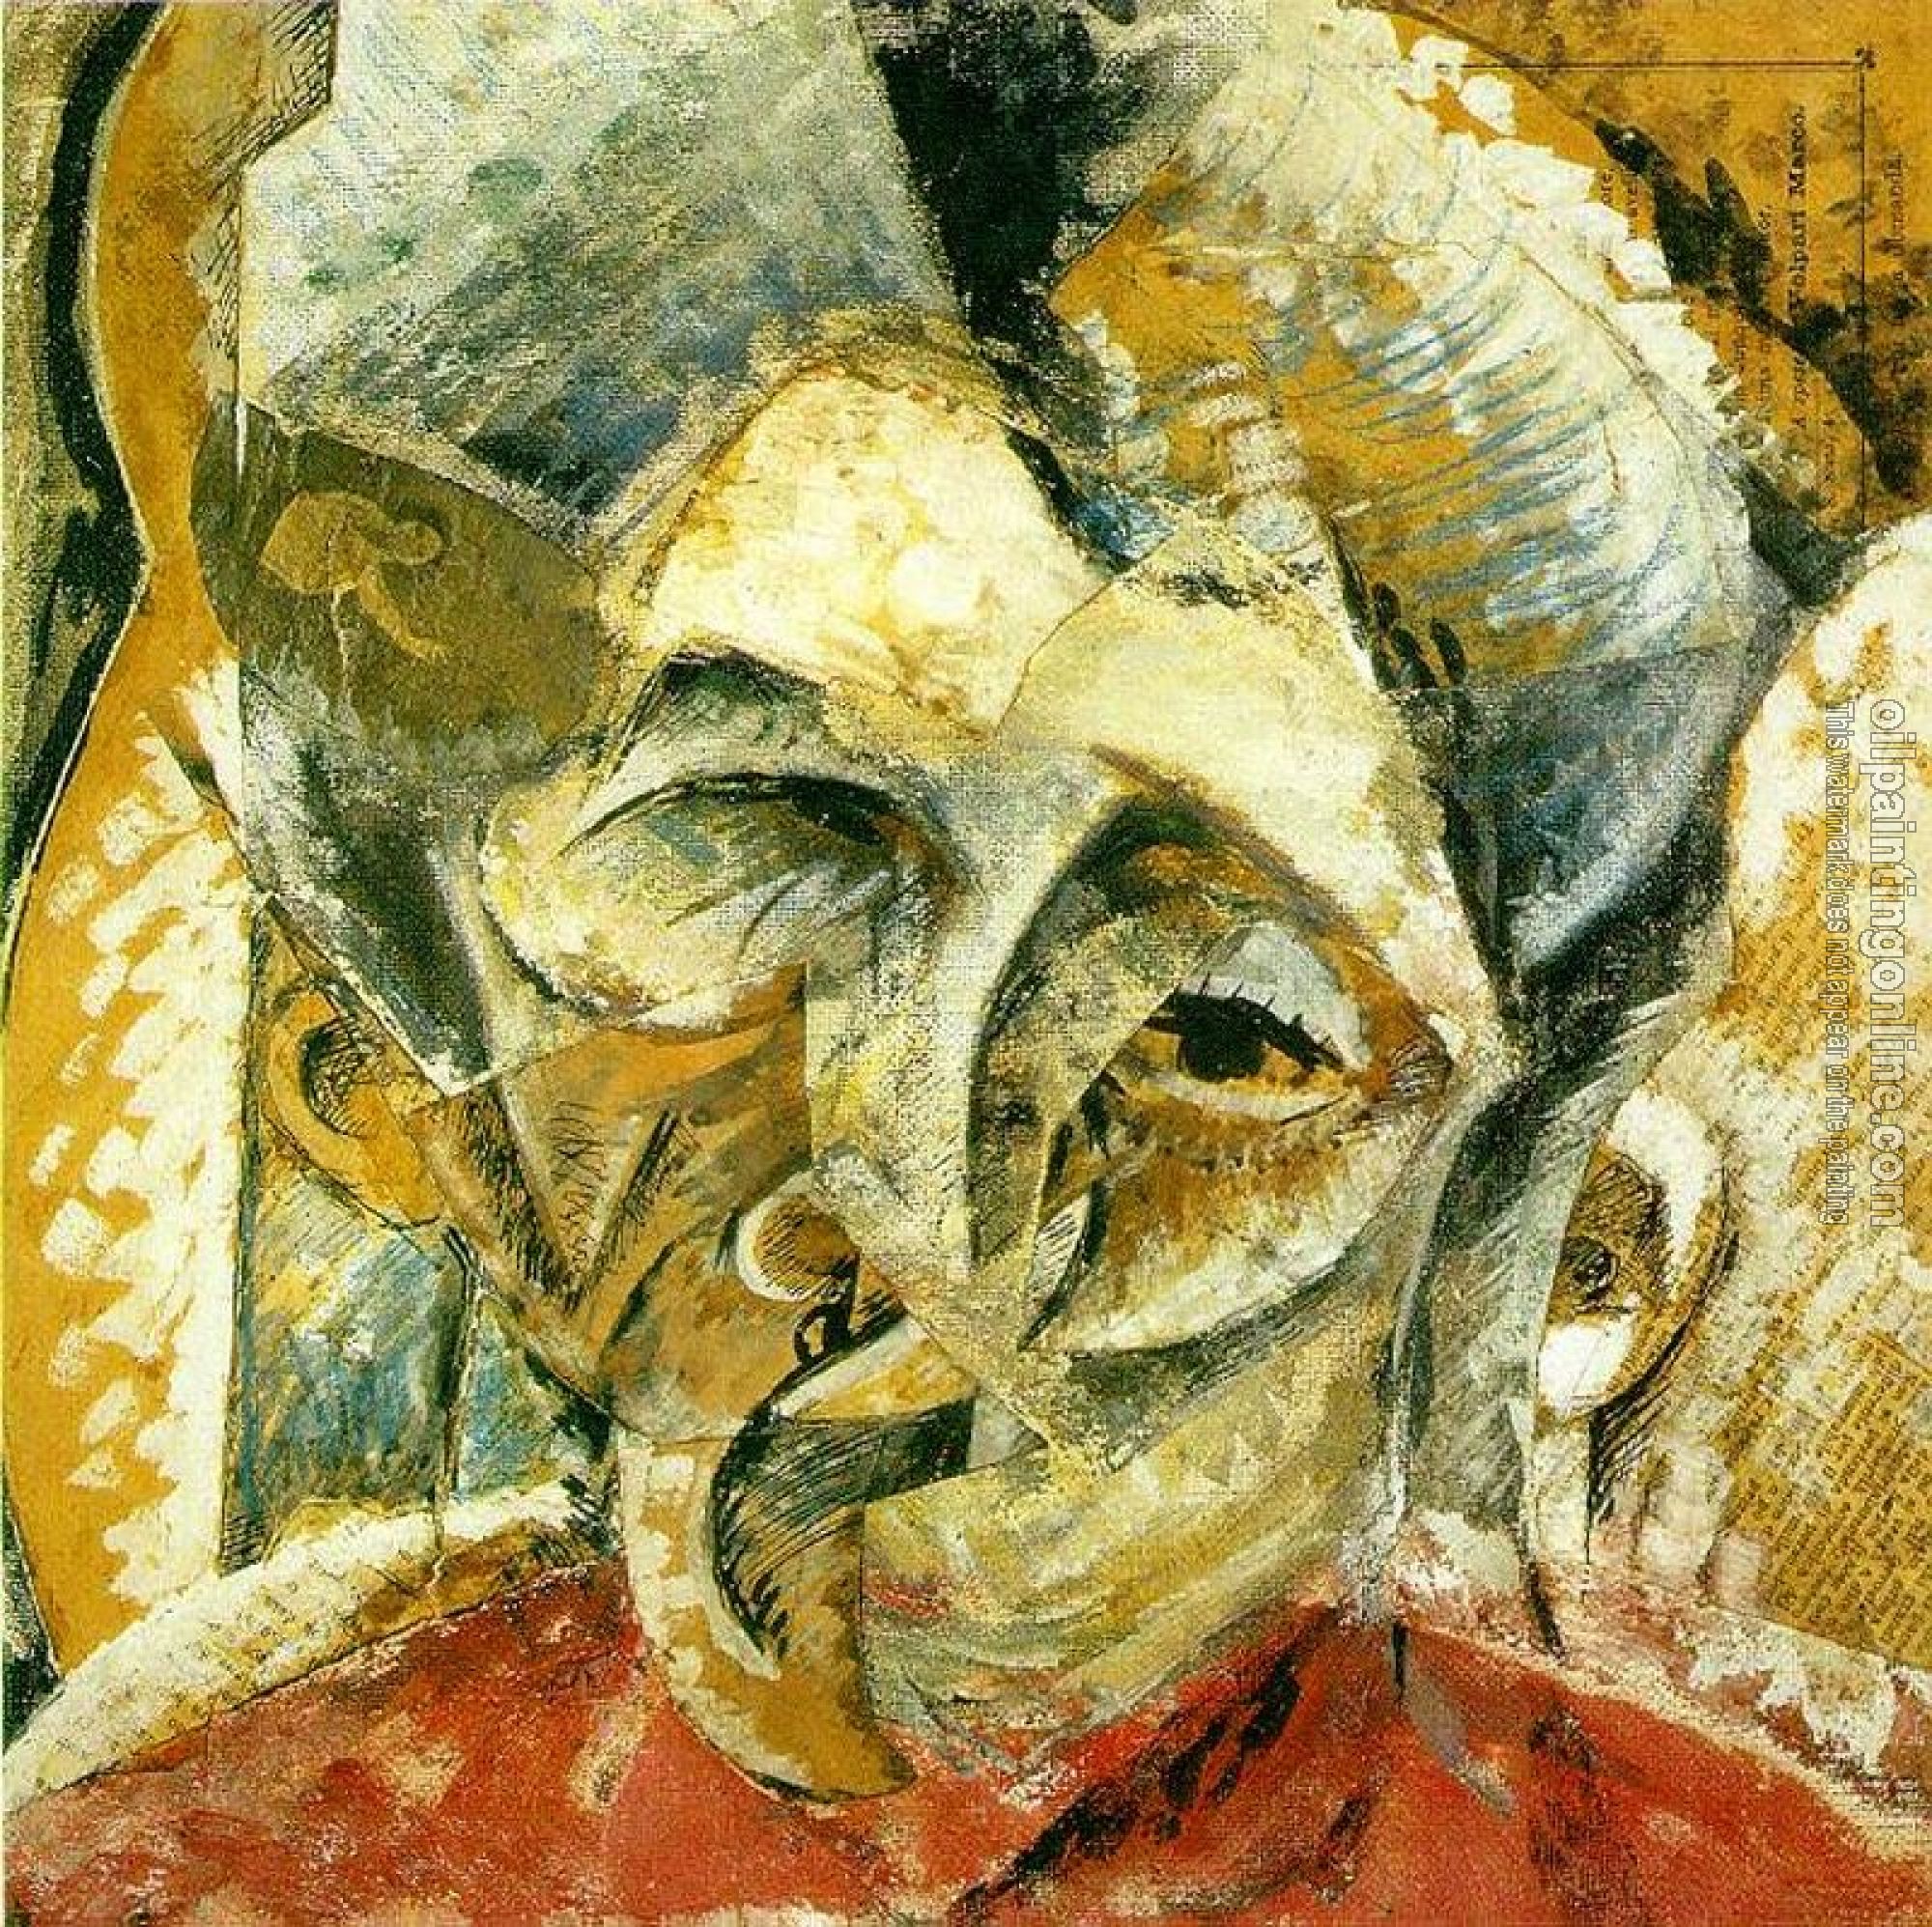 Umberto Boccioni - Dynamism of a Woman's Head